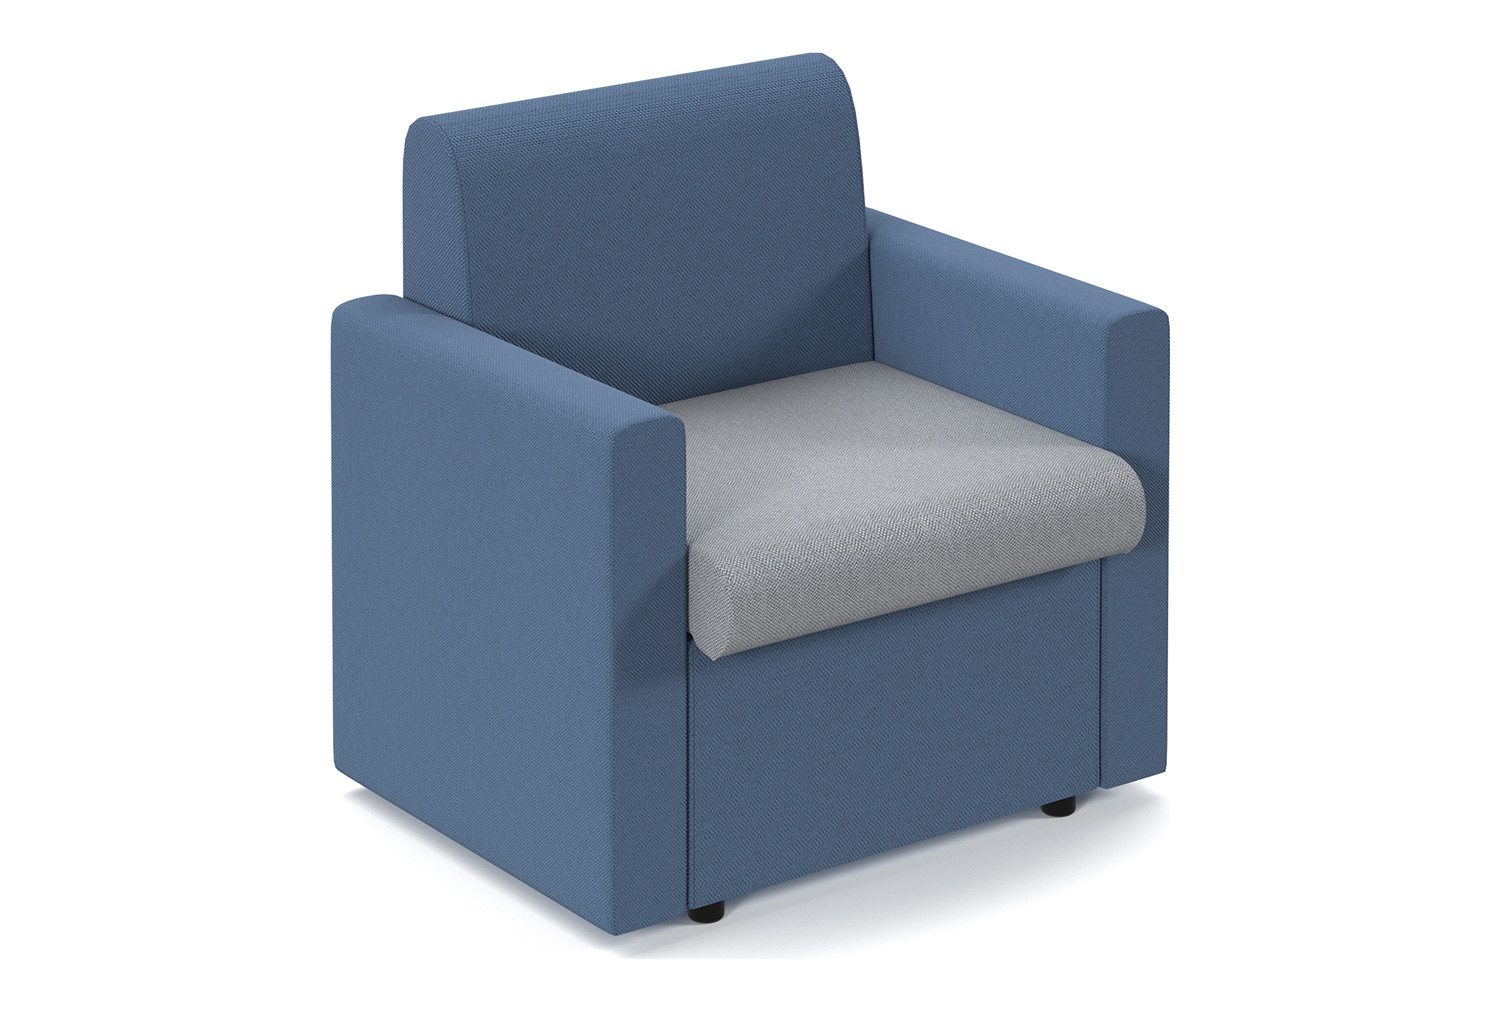 Portland 2 Tone Modular Soft Seating, Armchair, Late Grey Seat/Range Blue Back, Fully Installed